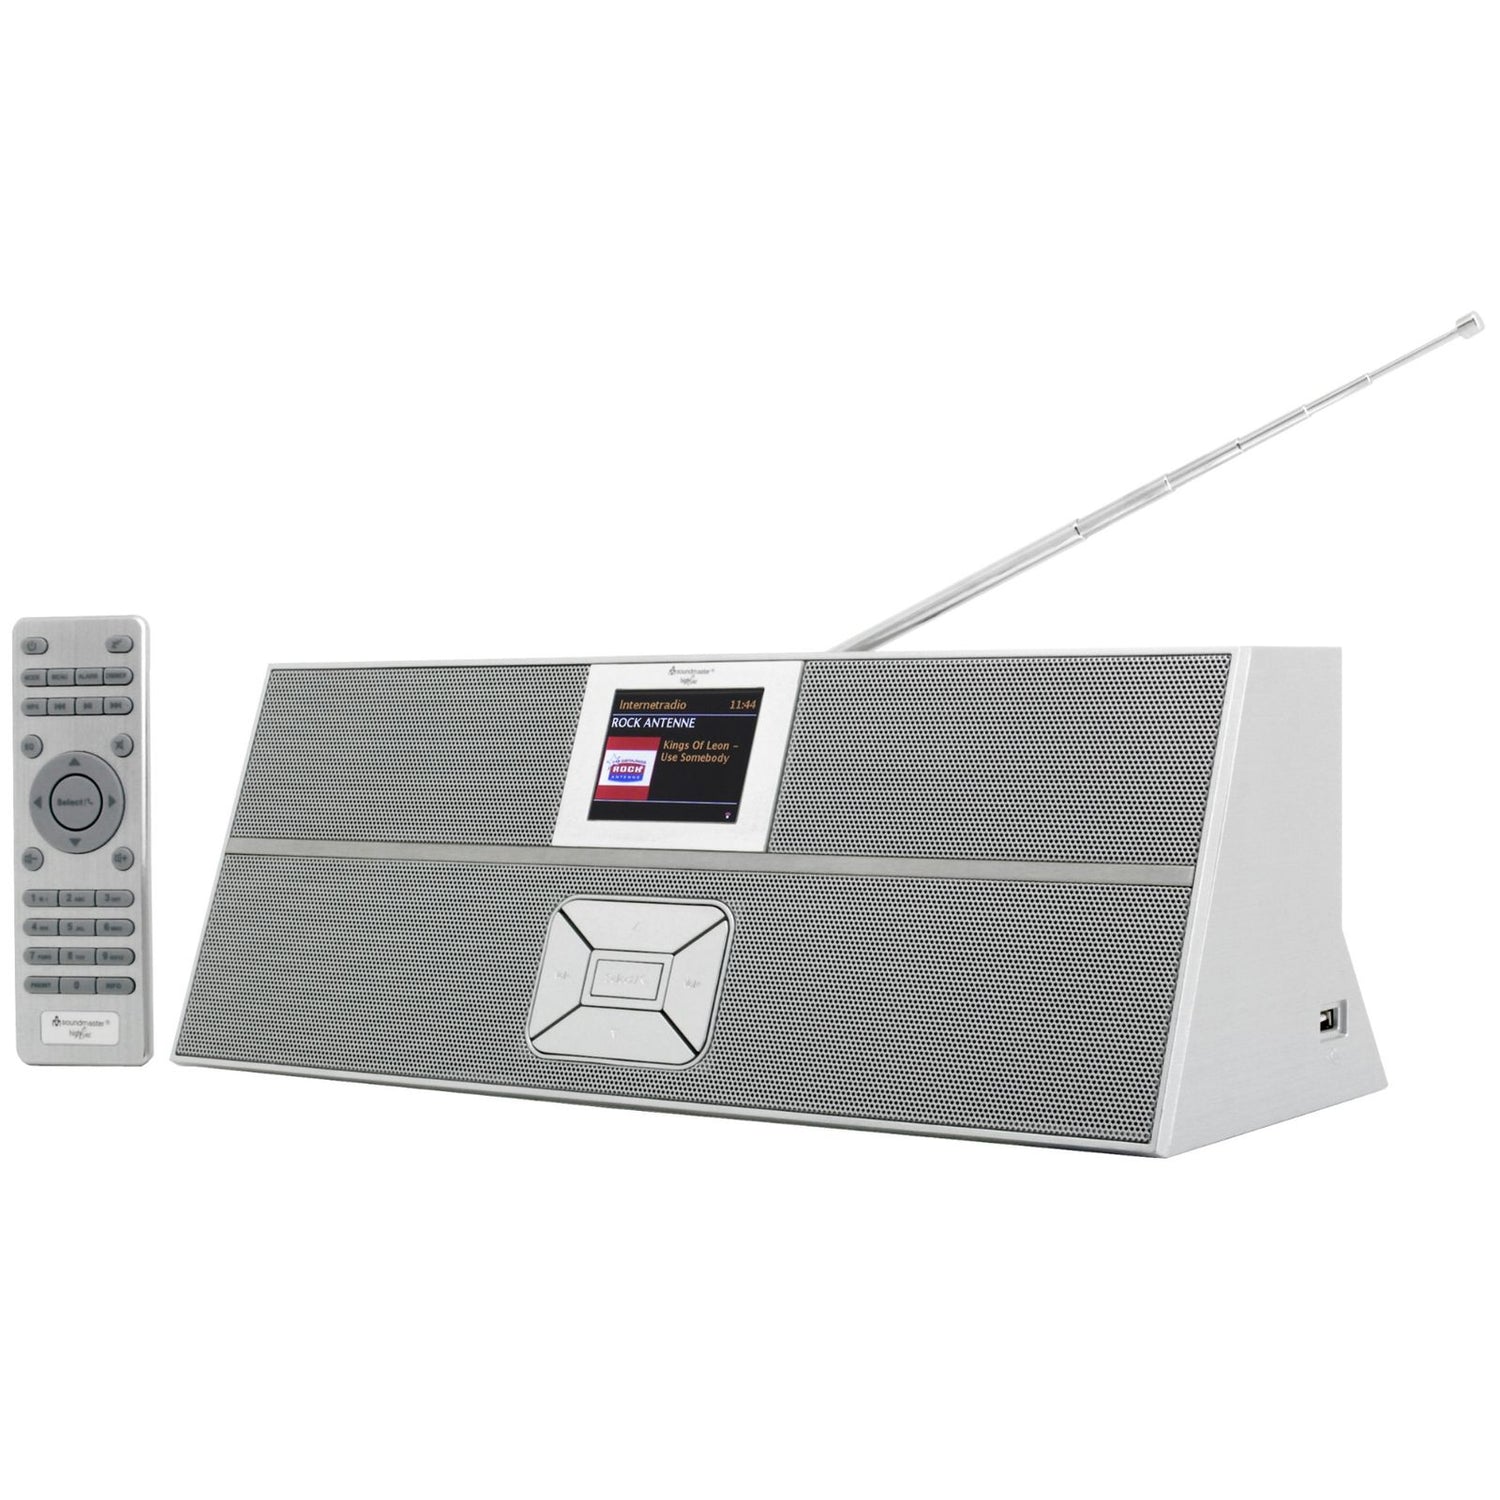 Soundmaster Highline IR3300SI Internet radio DAB+ digital radio network player FM radio USB Bluetooth Alexa capable